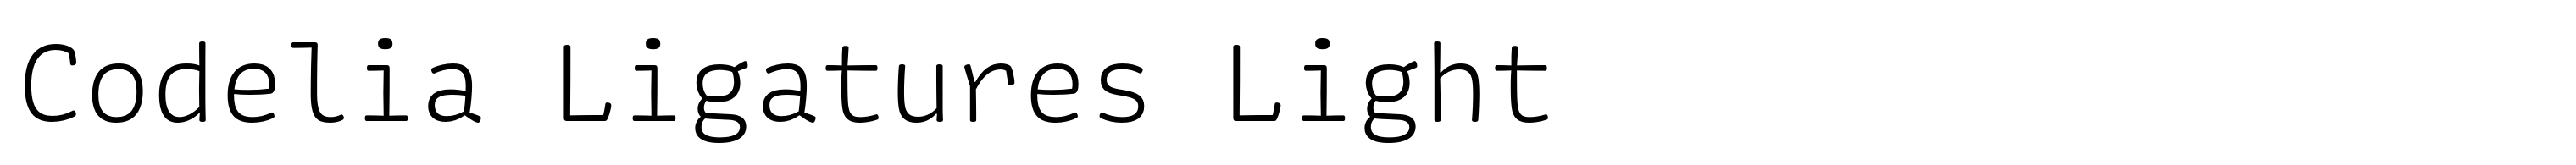 Codelia Ligatures Light